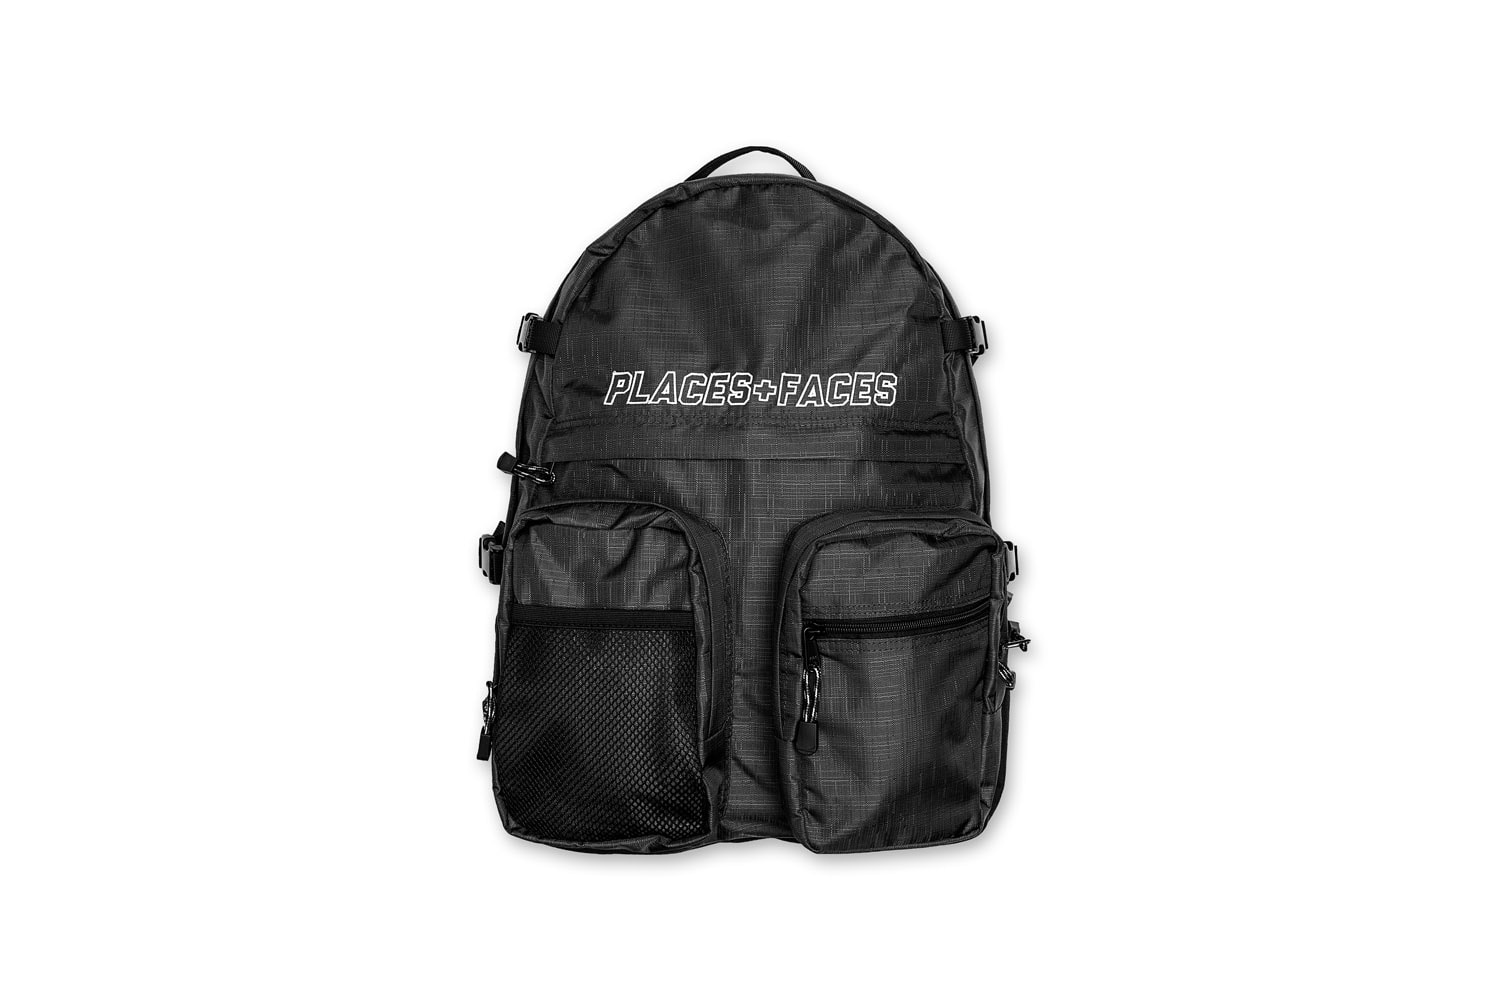 Places+Faces 2018 Drop 2 release info HBX backpack pouch T-shirts hoodies jacket